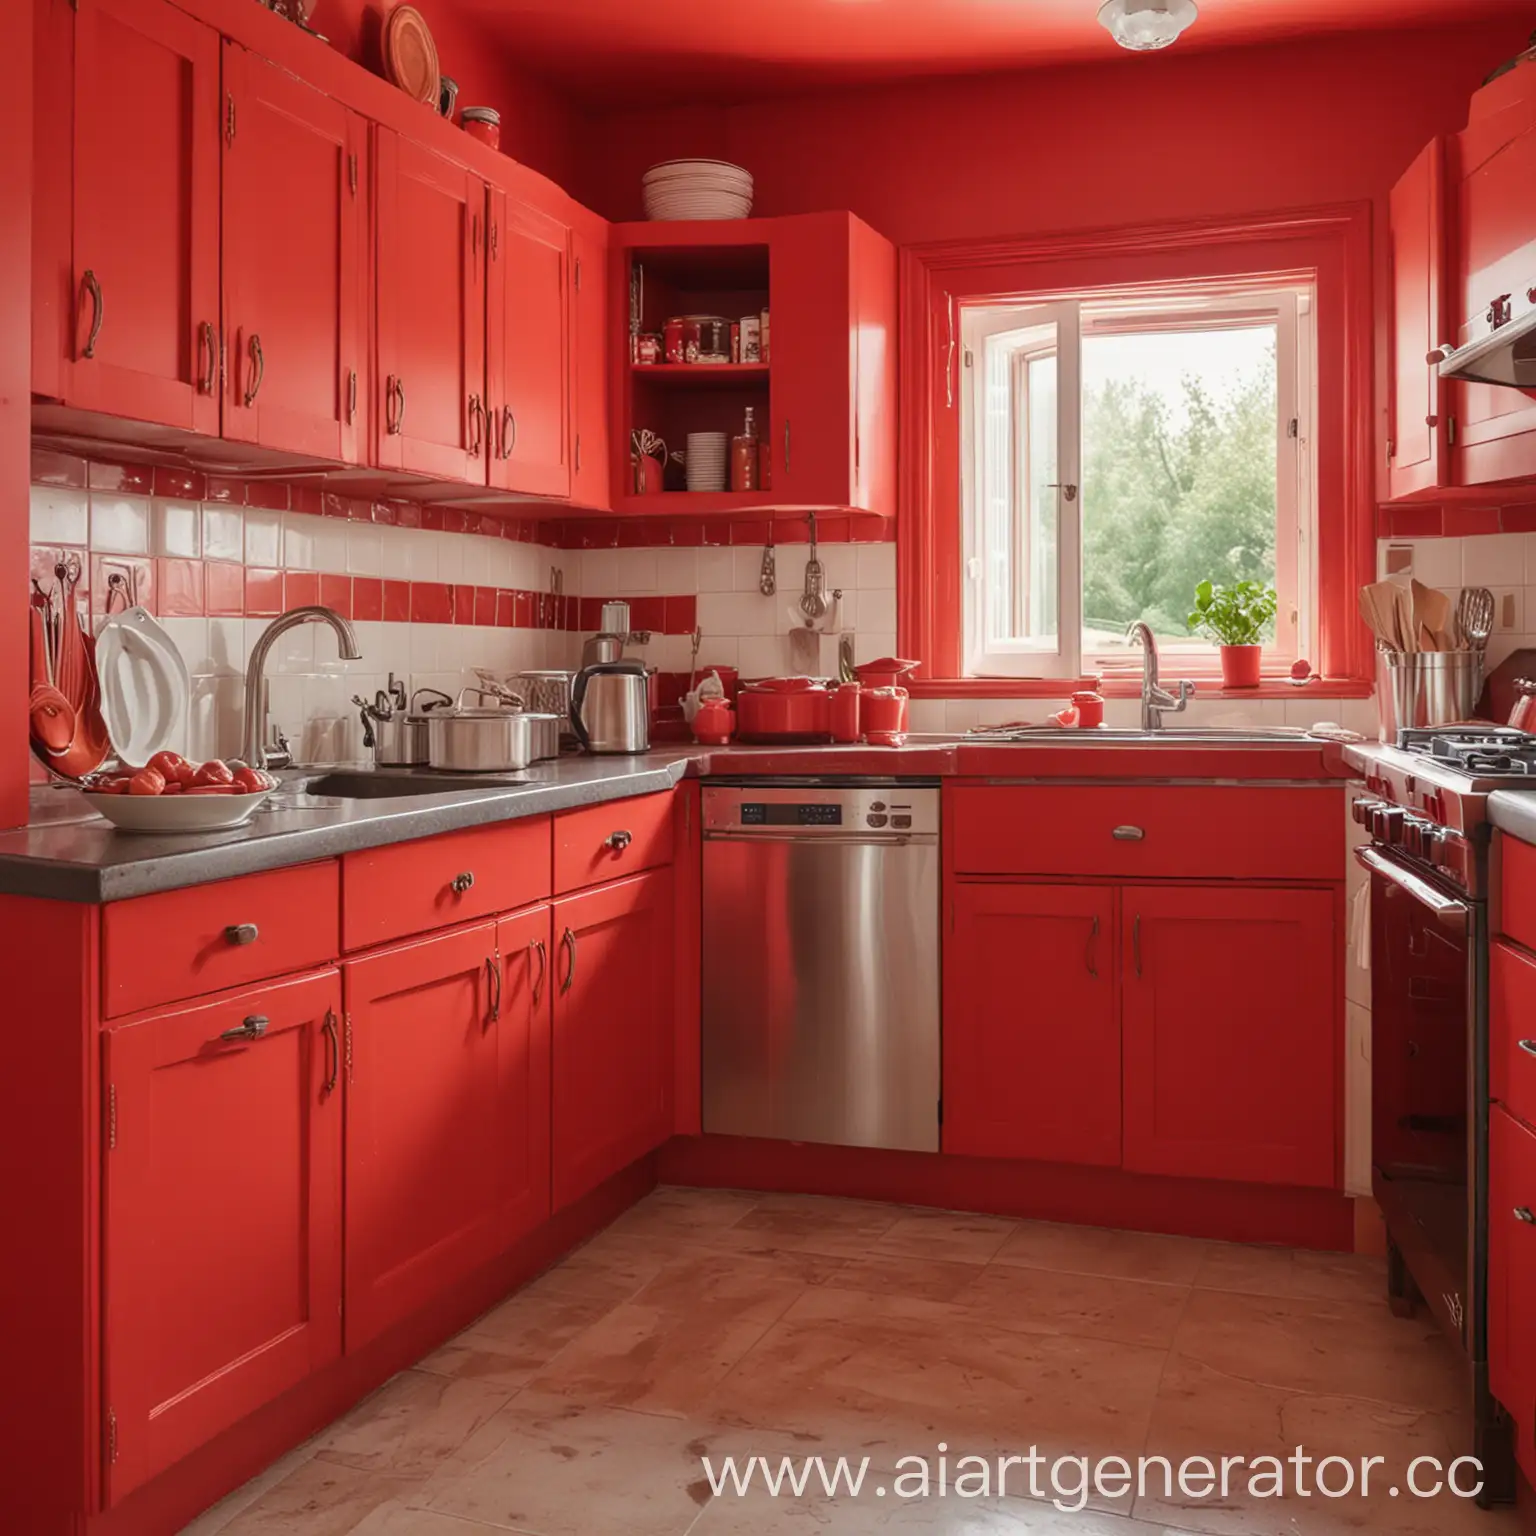 Bright-Red-Corner-Kitchen-Interior-with-Central-Focus